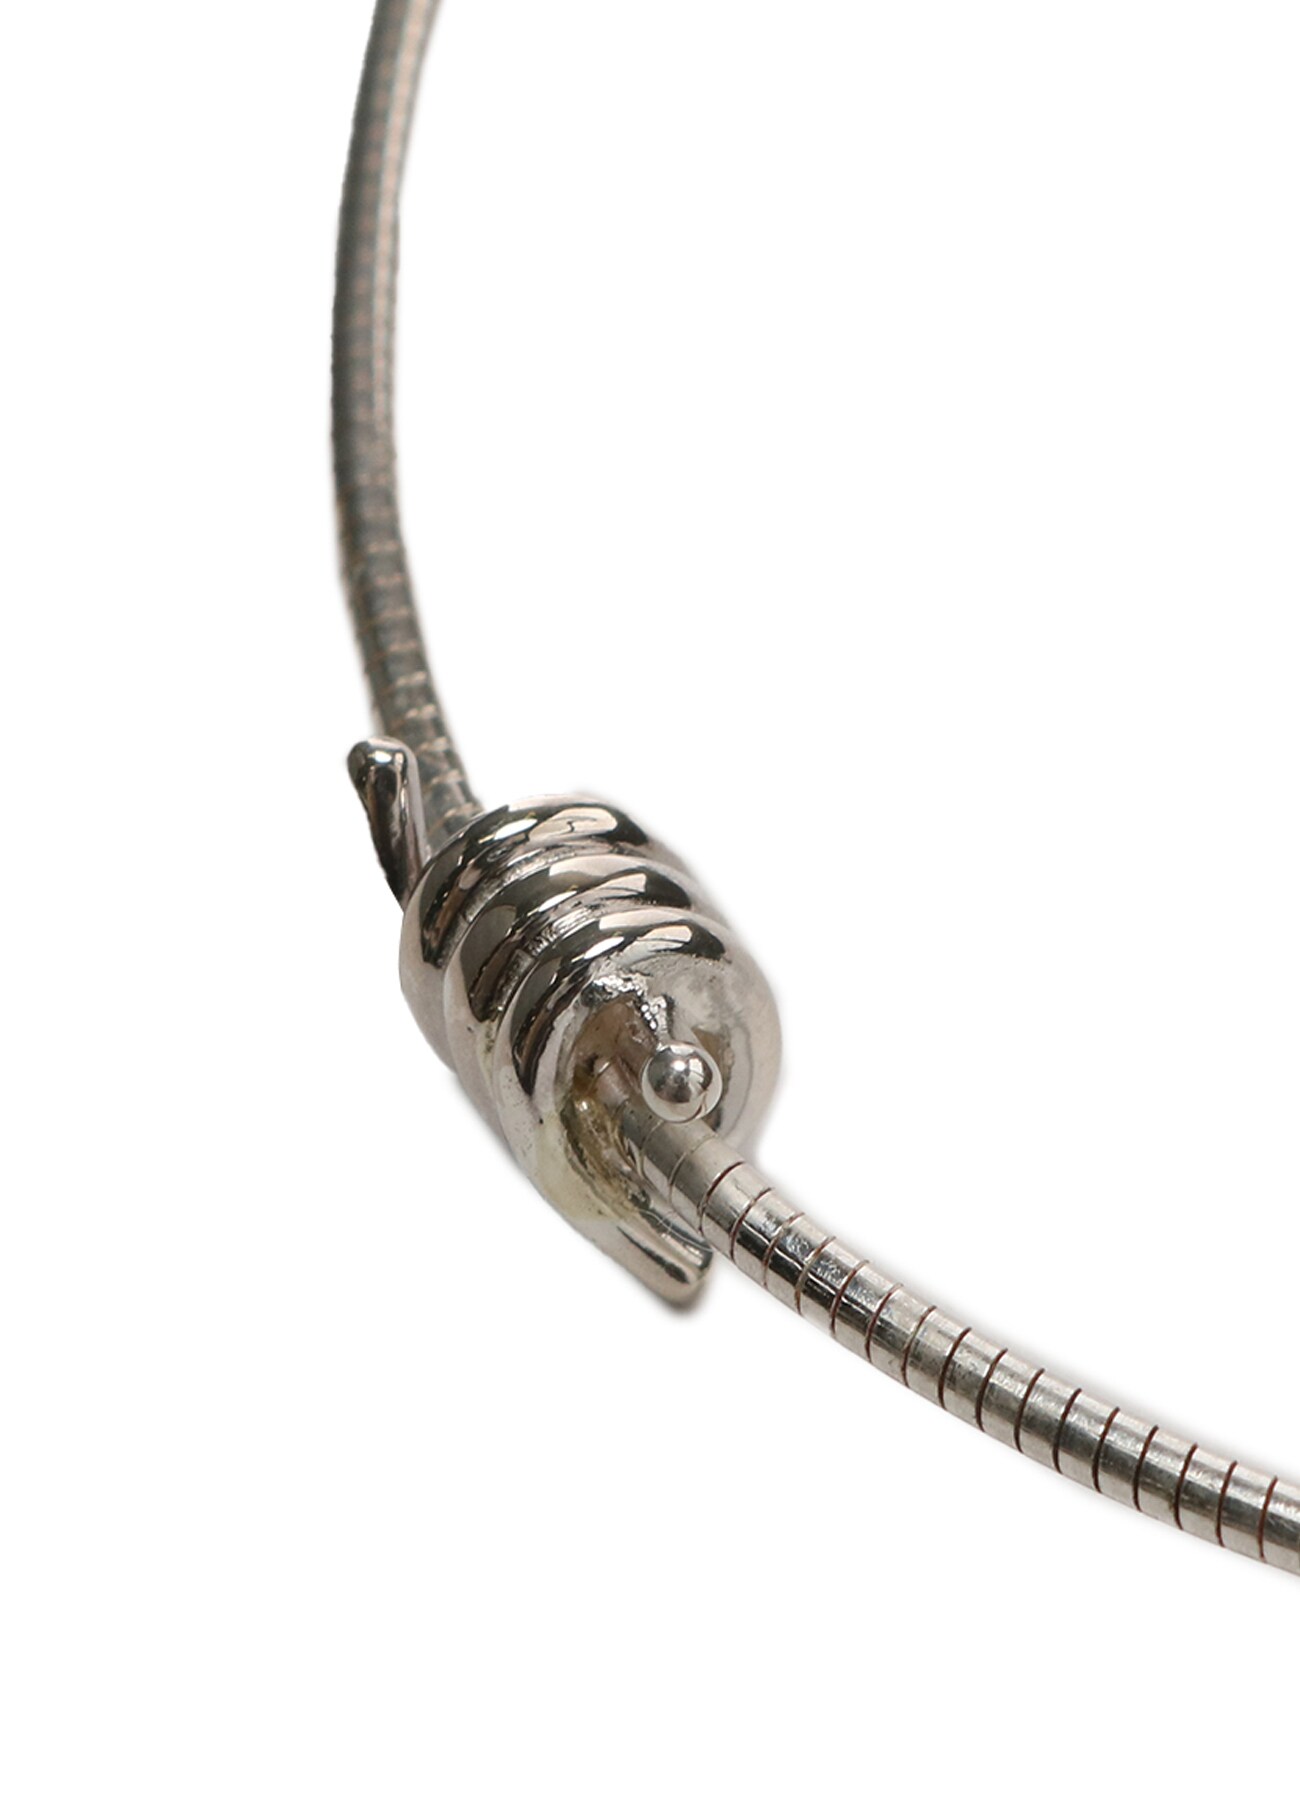 Silver 925 Bare Wire Bracelet